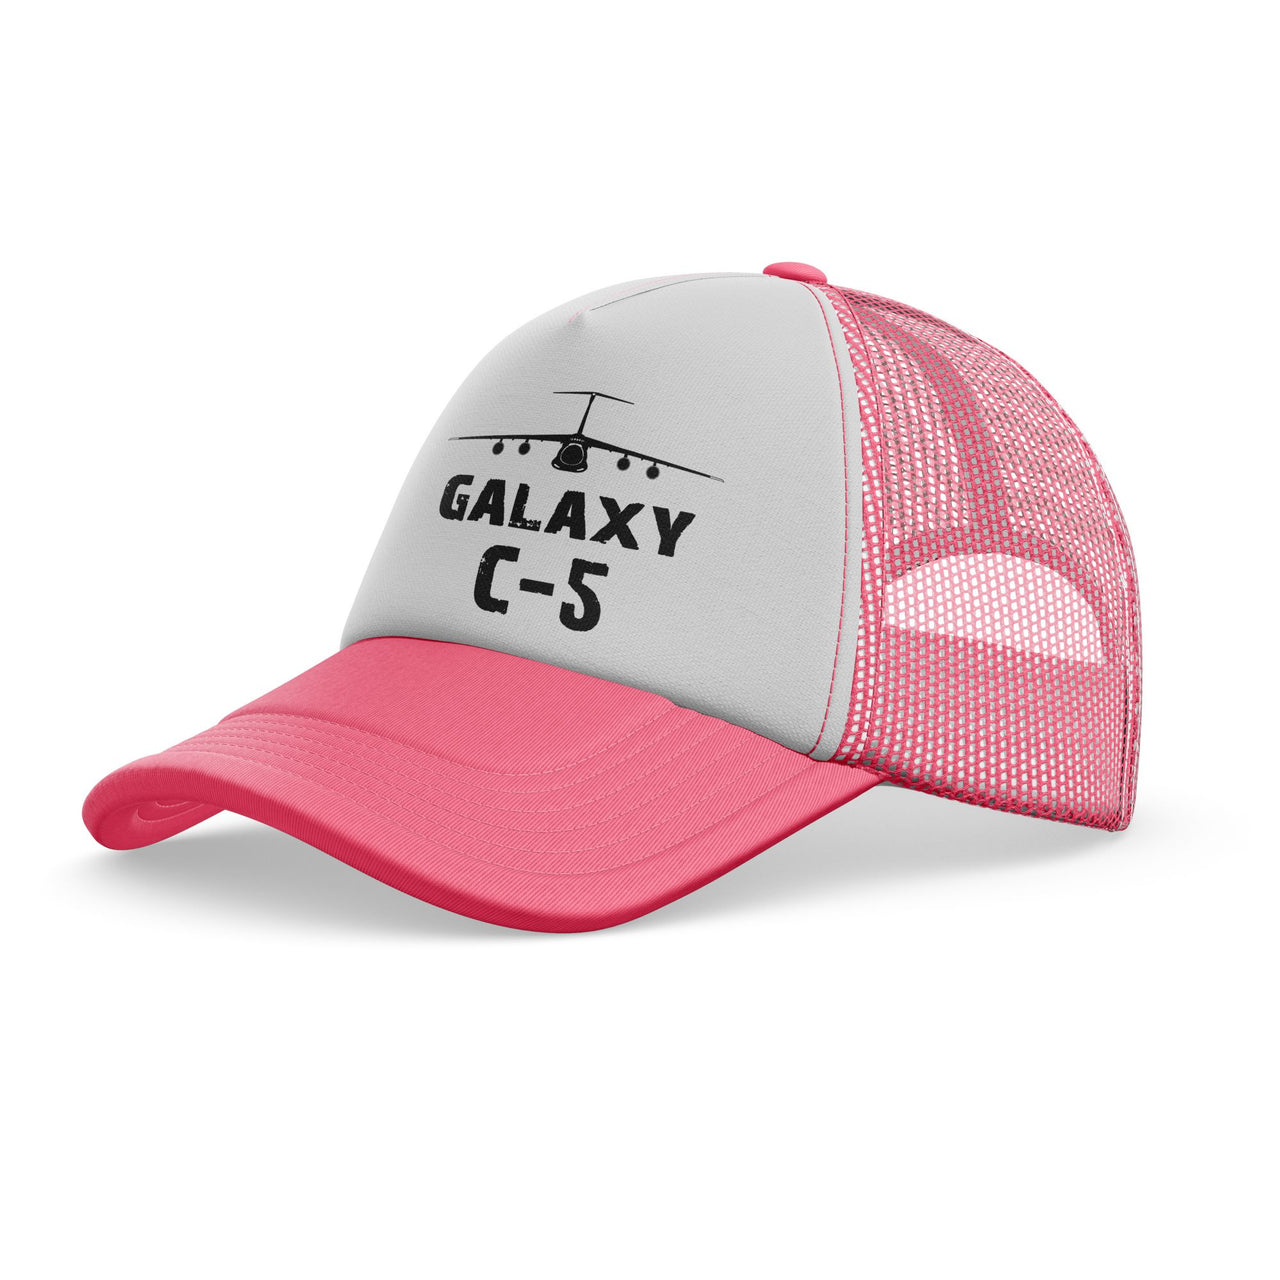 Galaxy C-5 & Plane Designed Trucker Caps & Hats